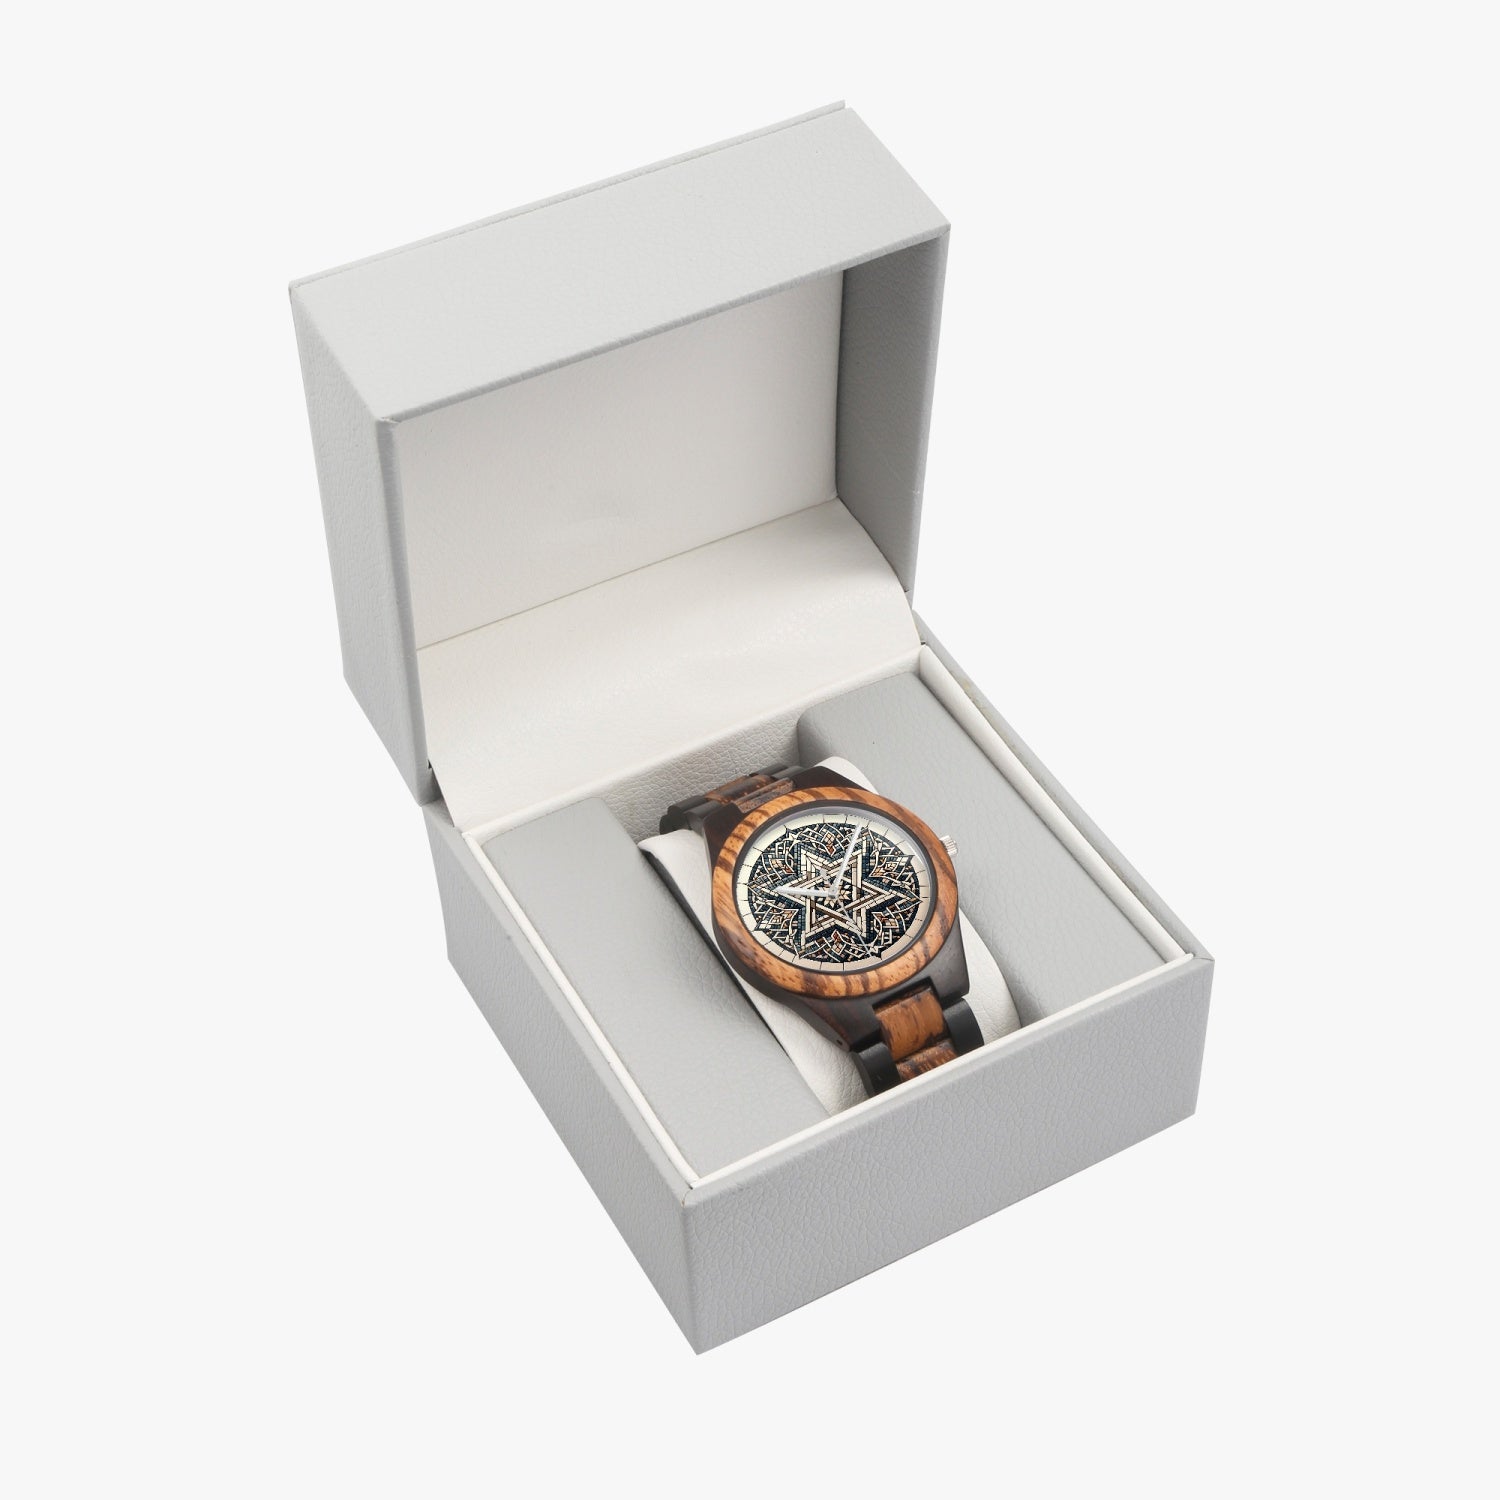 Intricate Star of David Ebony Wooden Watch in box